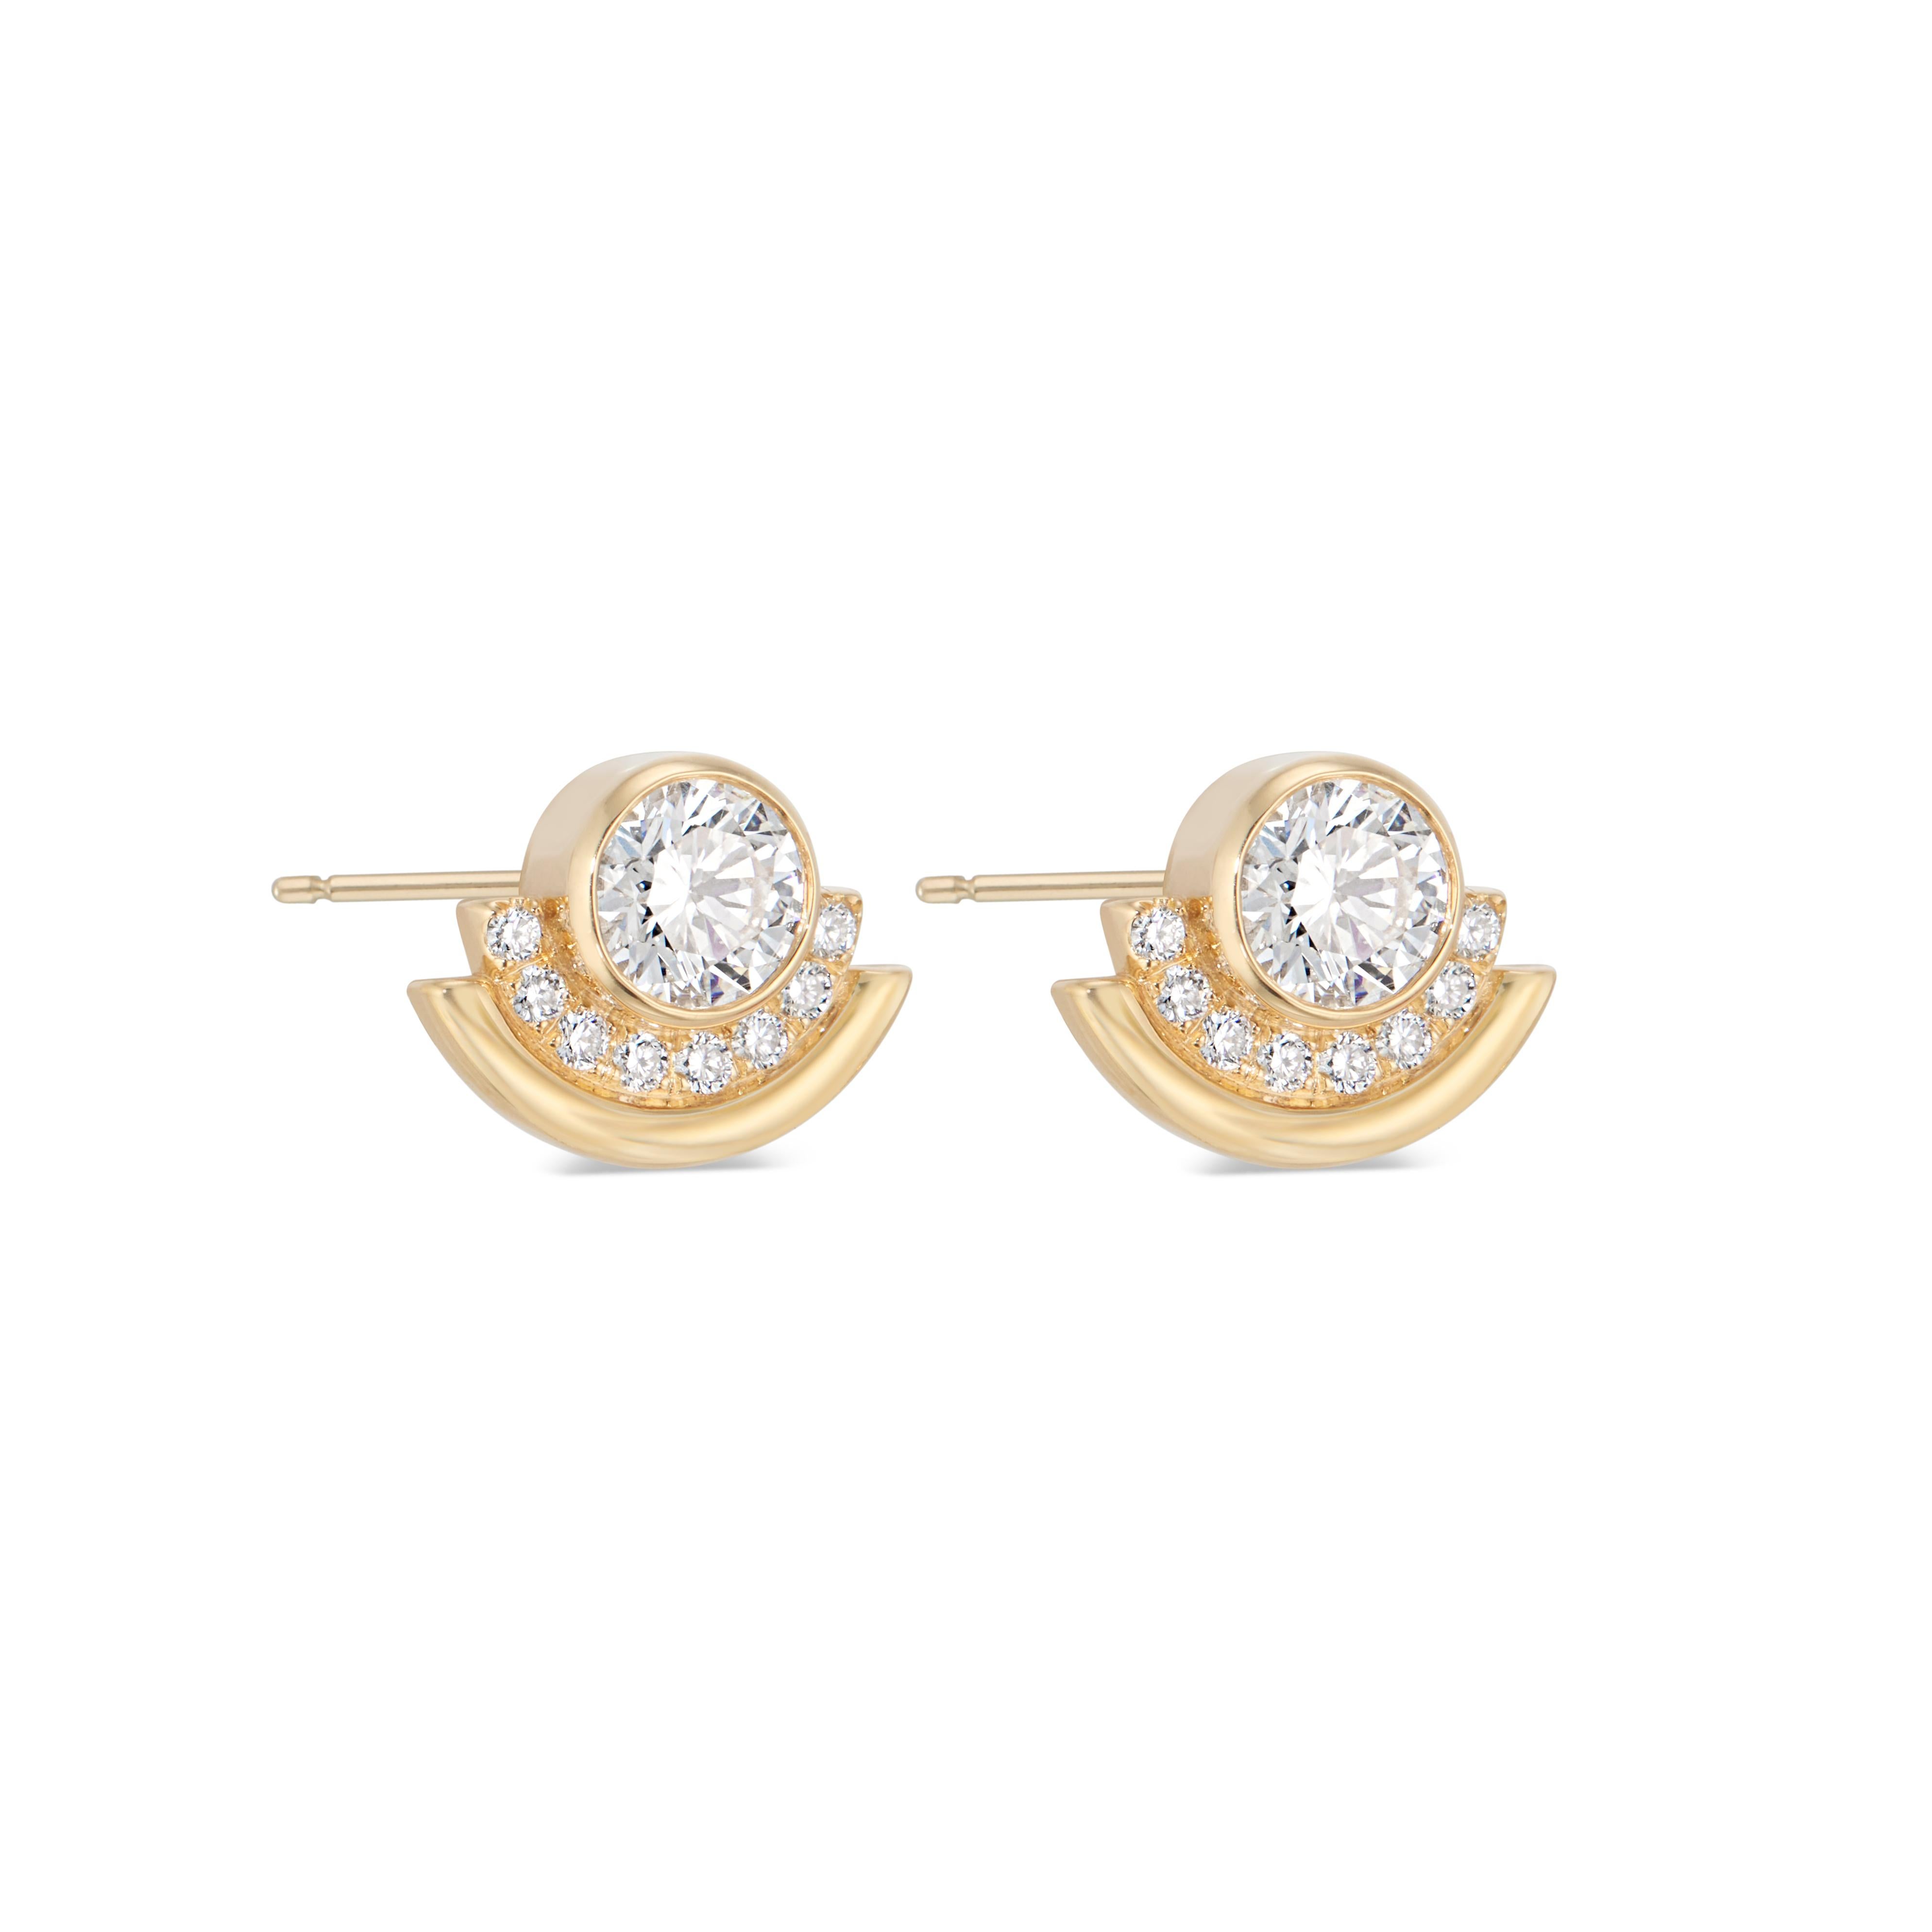 Taille brillant Boucles d'oreilles Arc en or 18K de Brilliante Perez, 1,16 carats de diamants taillés en brillant en vente